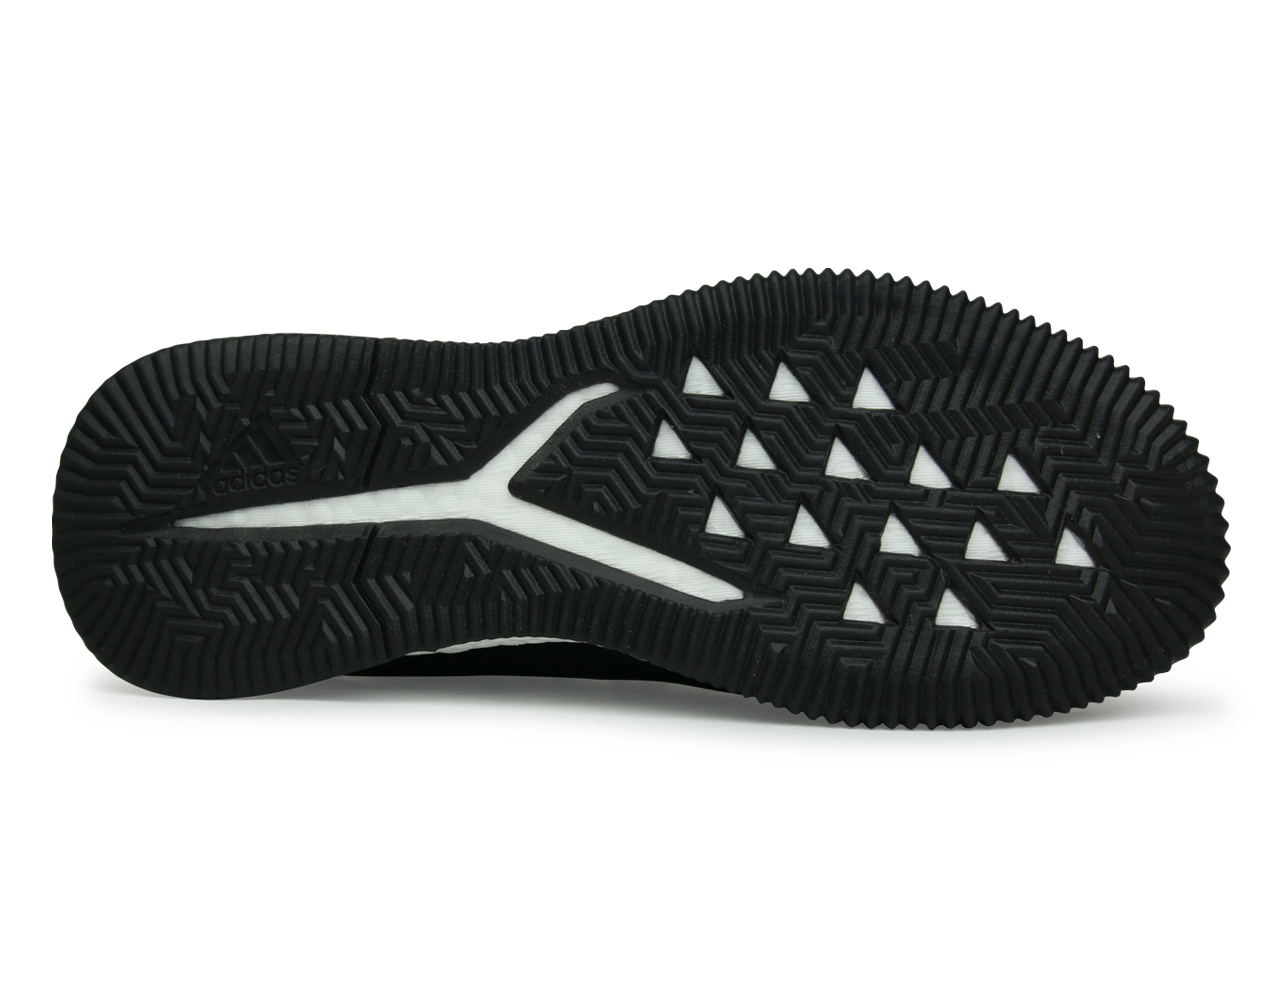 adidas Men's Predator Tango 18.1 Shoes Core Black